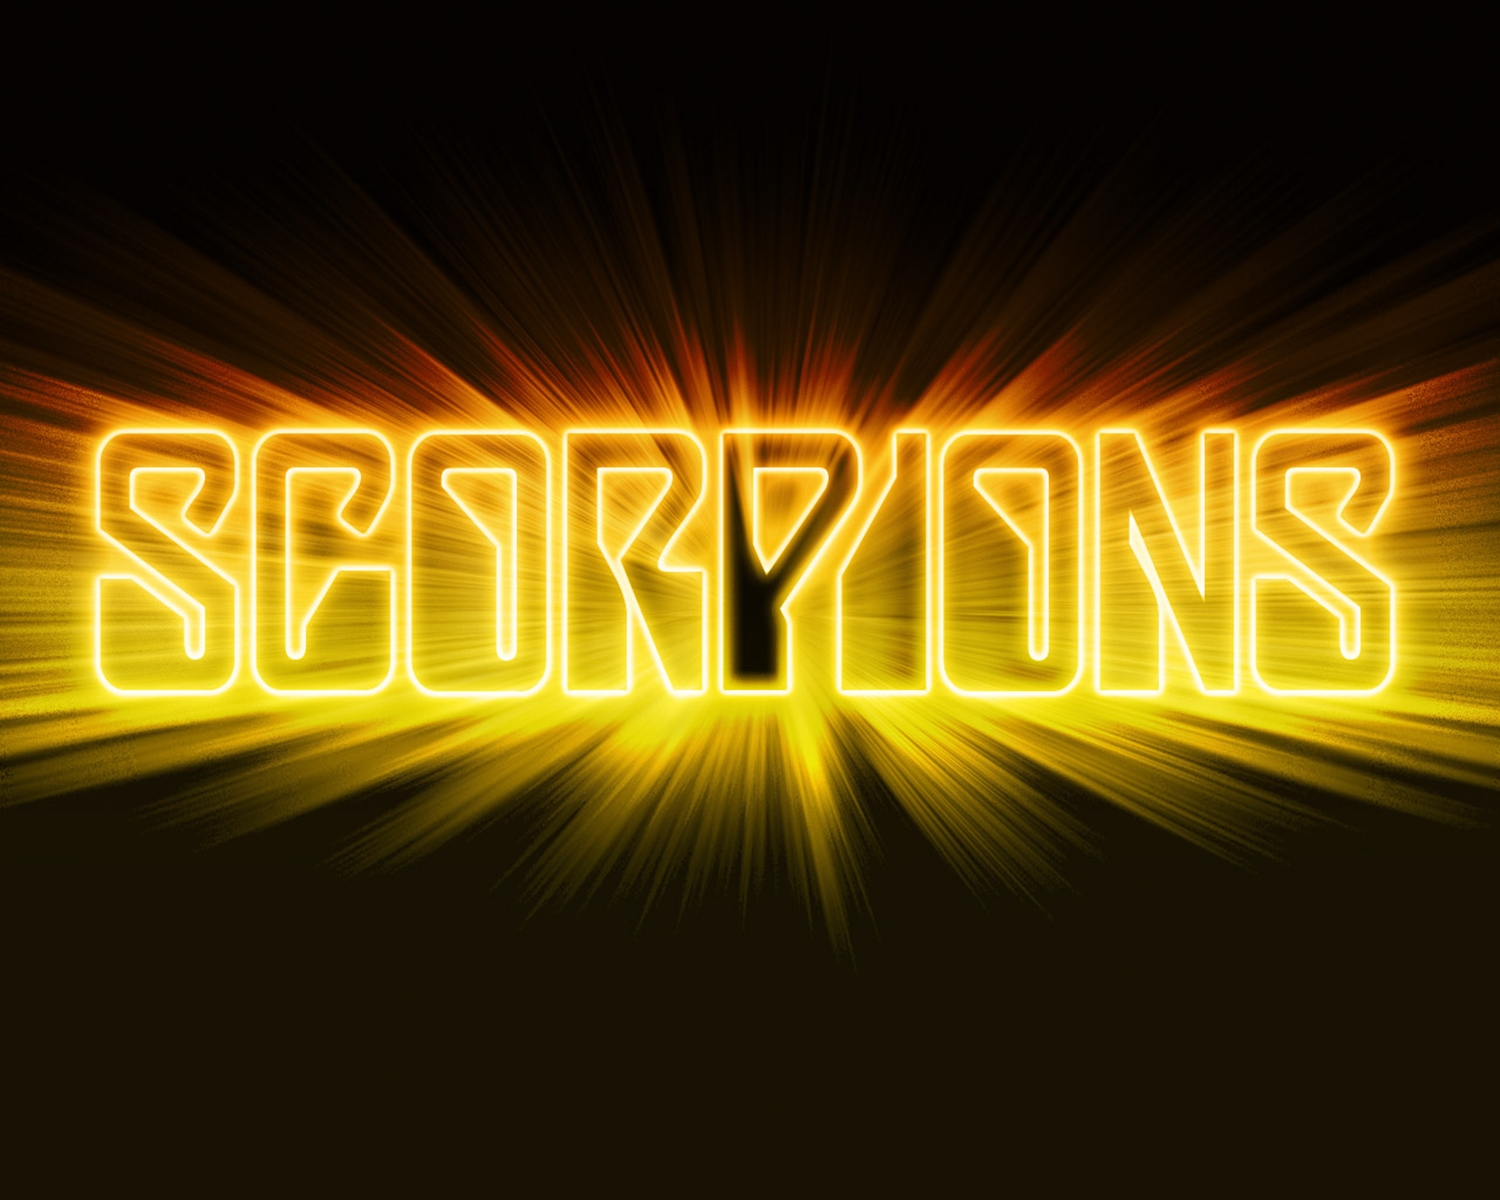 Free Scorpions Background